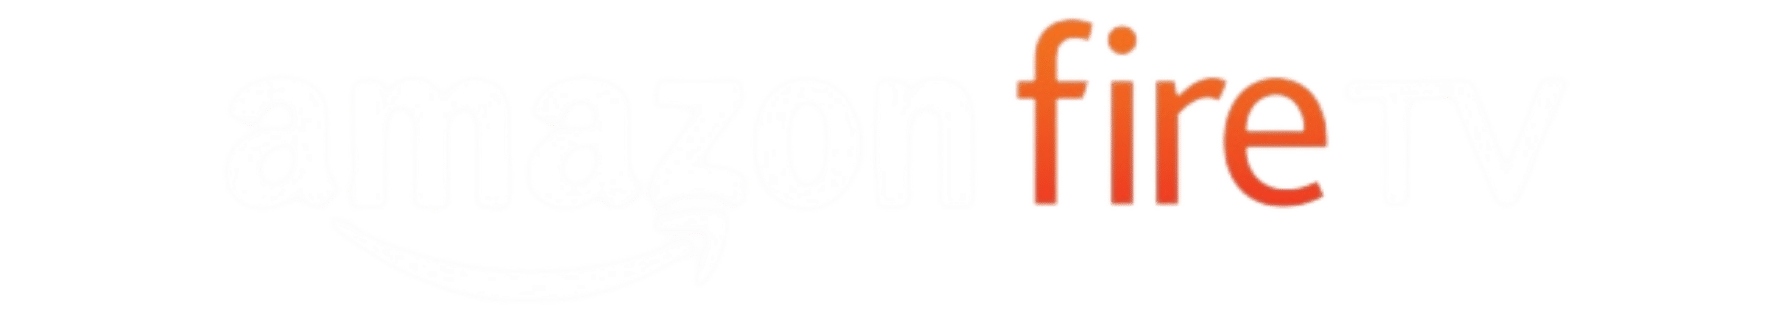 Amazon FireTV logo